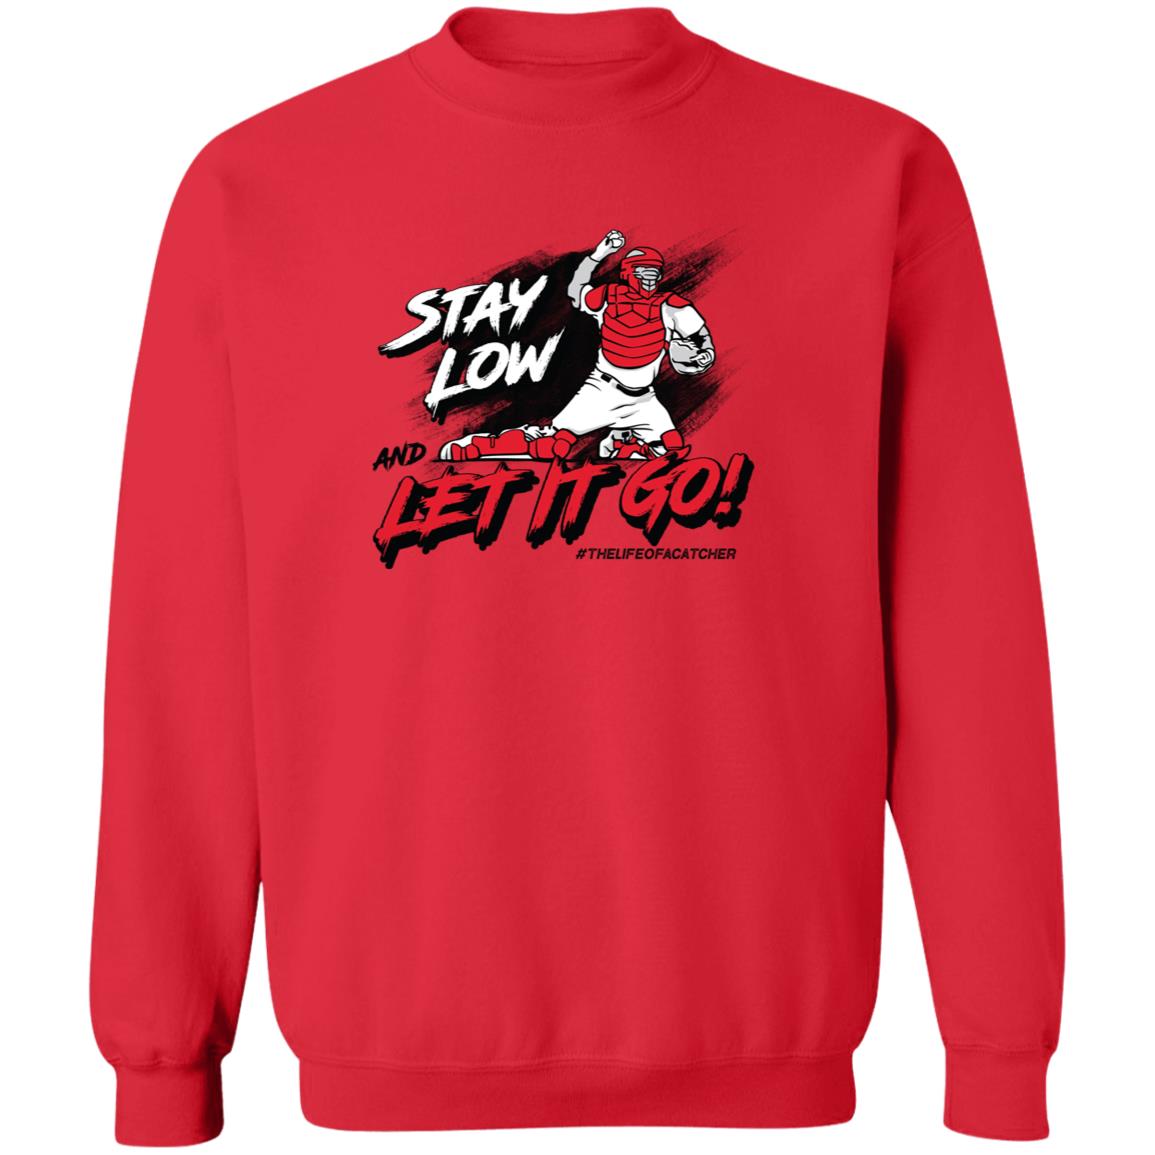 Stay Low & Let It Go Crewneck Sweatshirt - Red